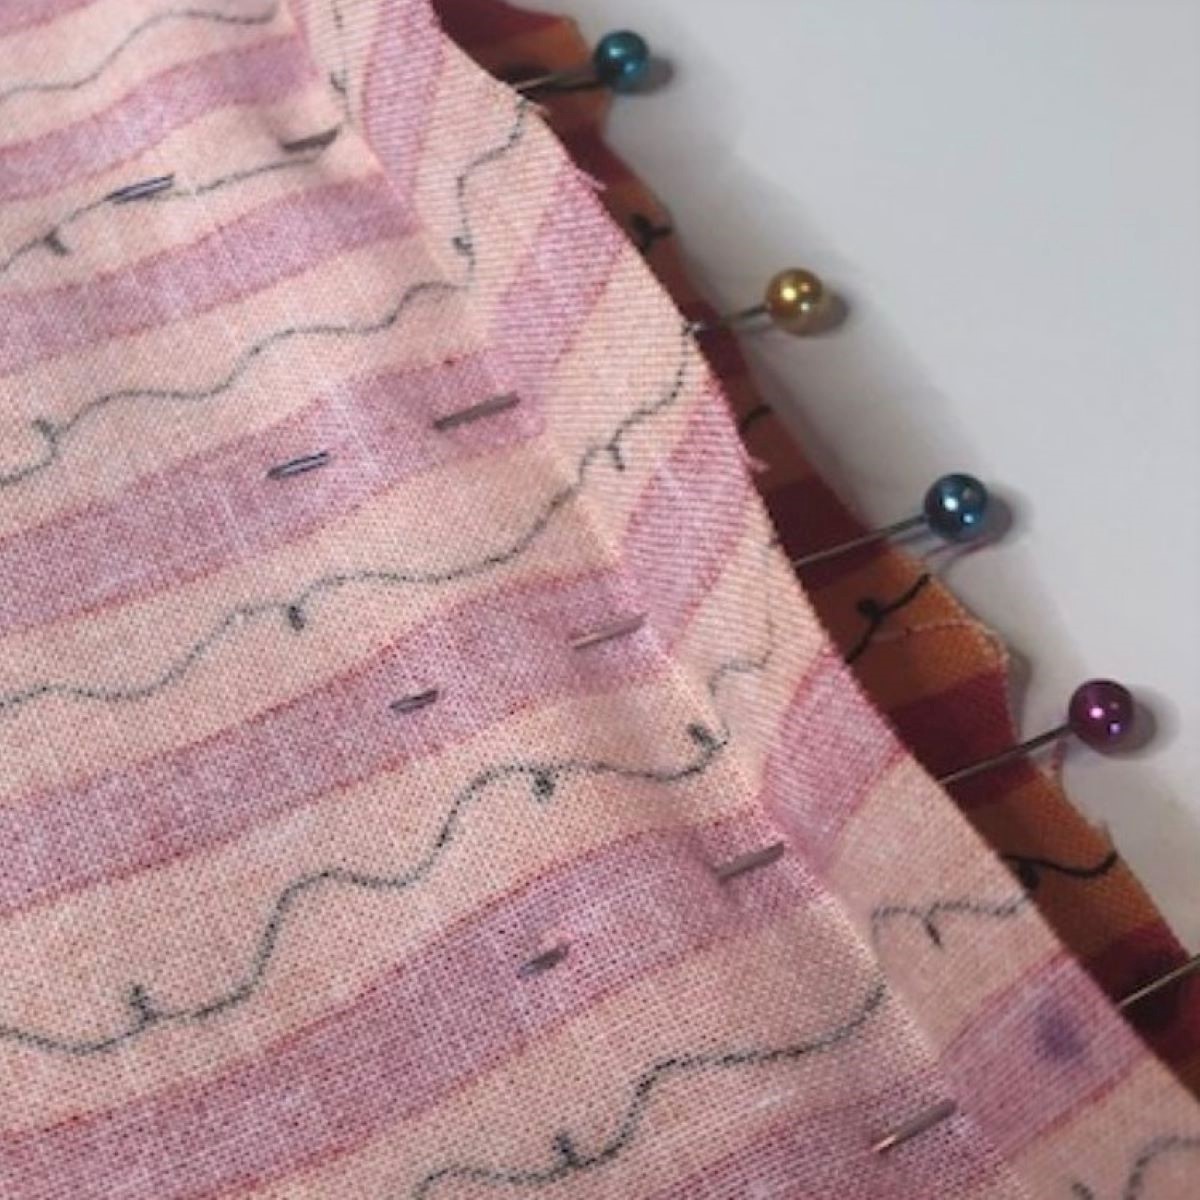 Matching Fabric Pattern Tutorial: pinning technique